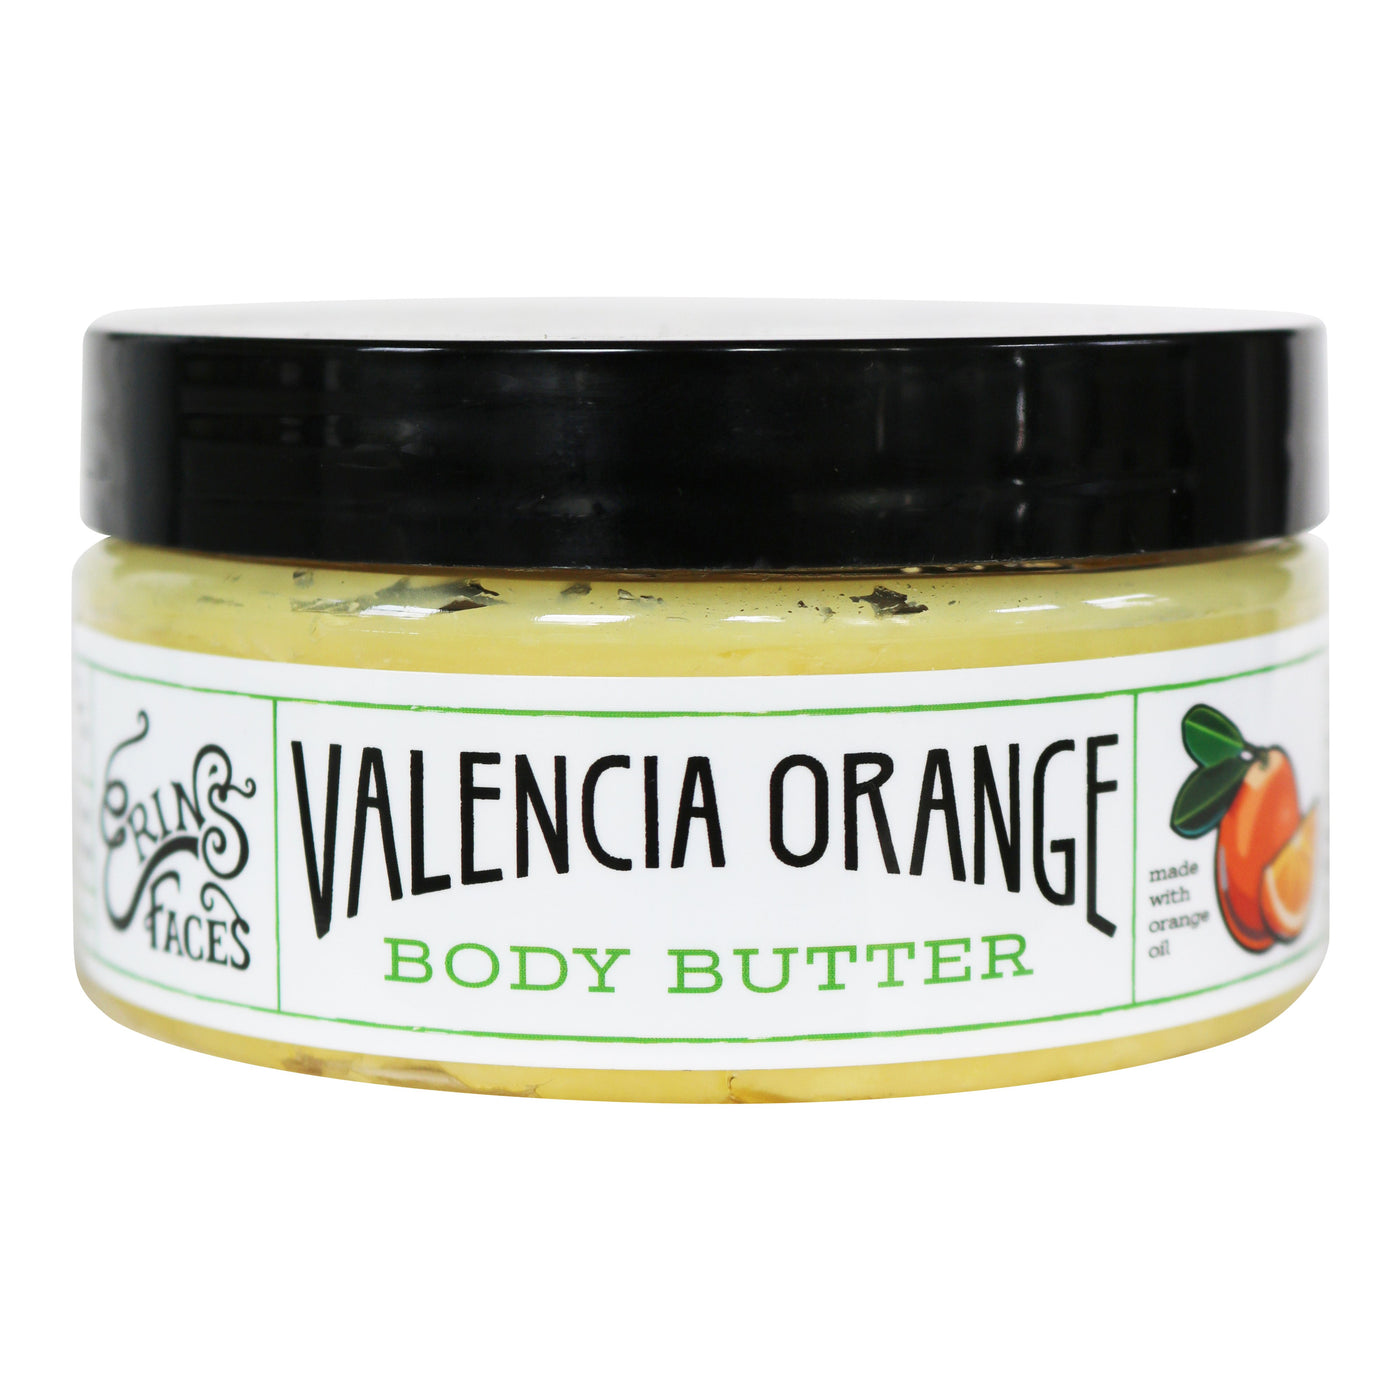 closed container of the valencia orange body moisturizer in the size 4oz